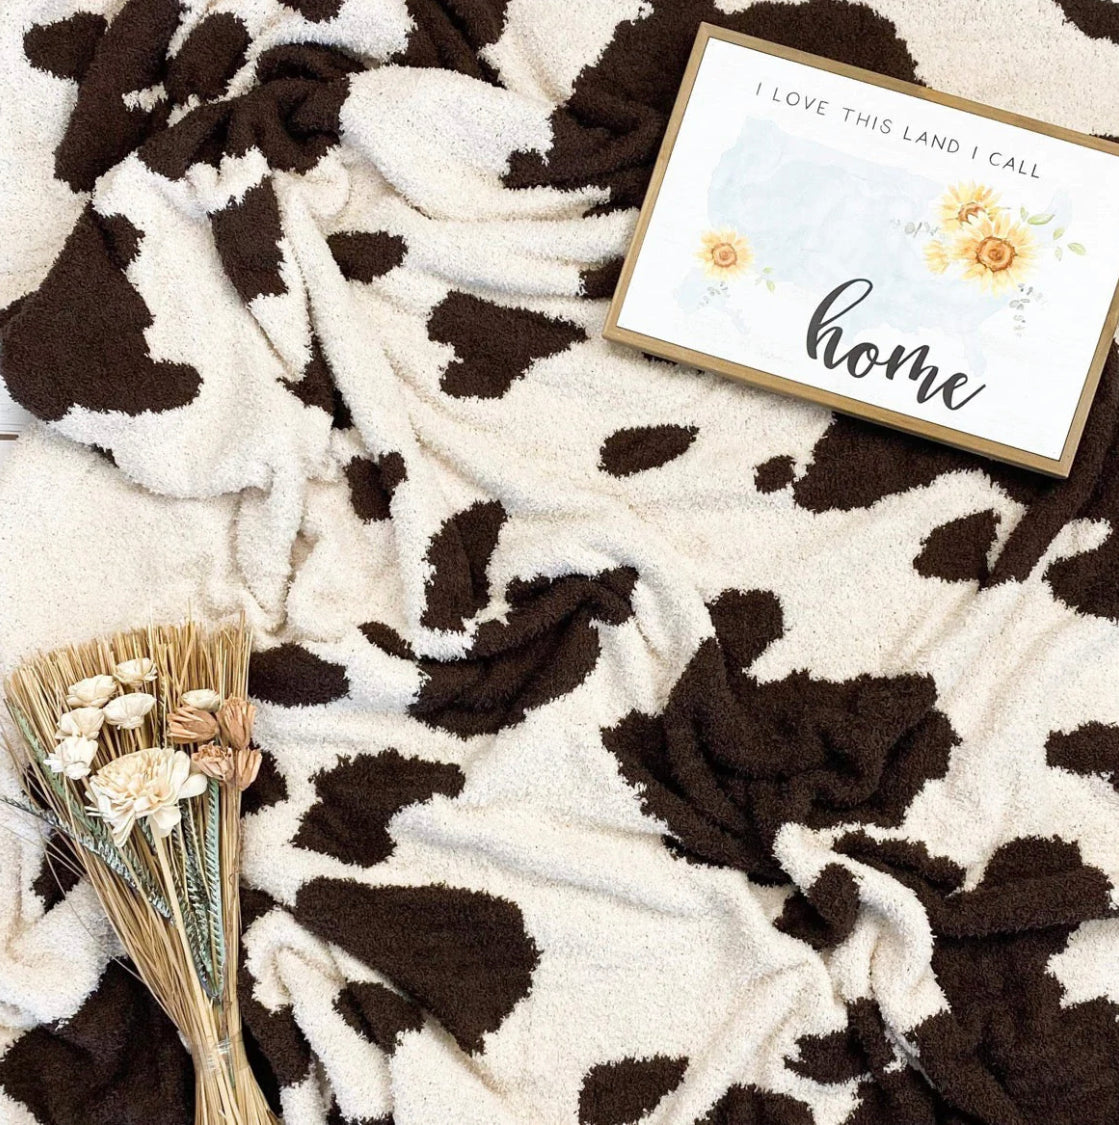 Cow Print Fuzzy Blanket